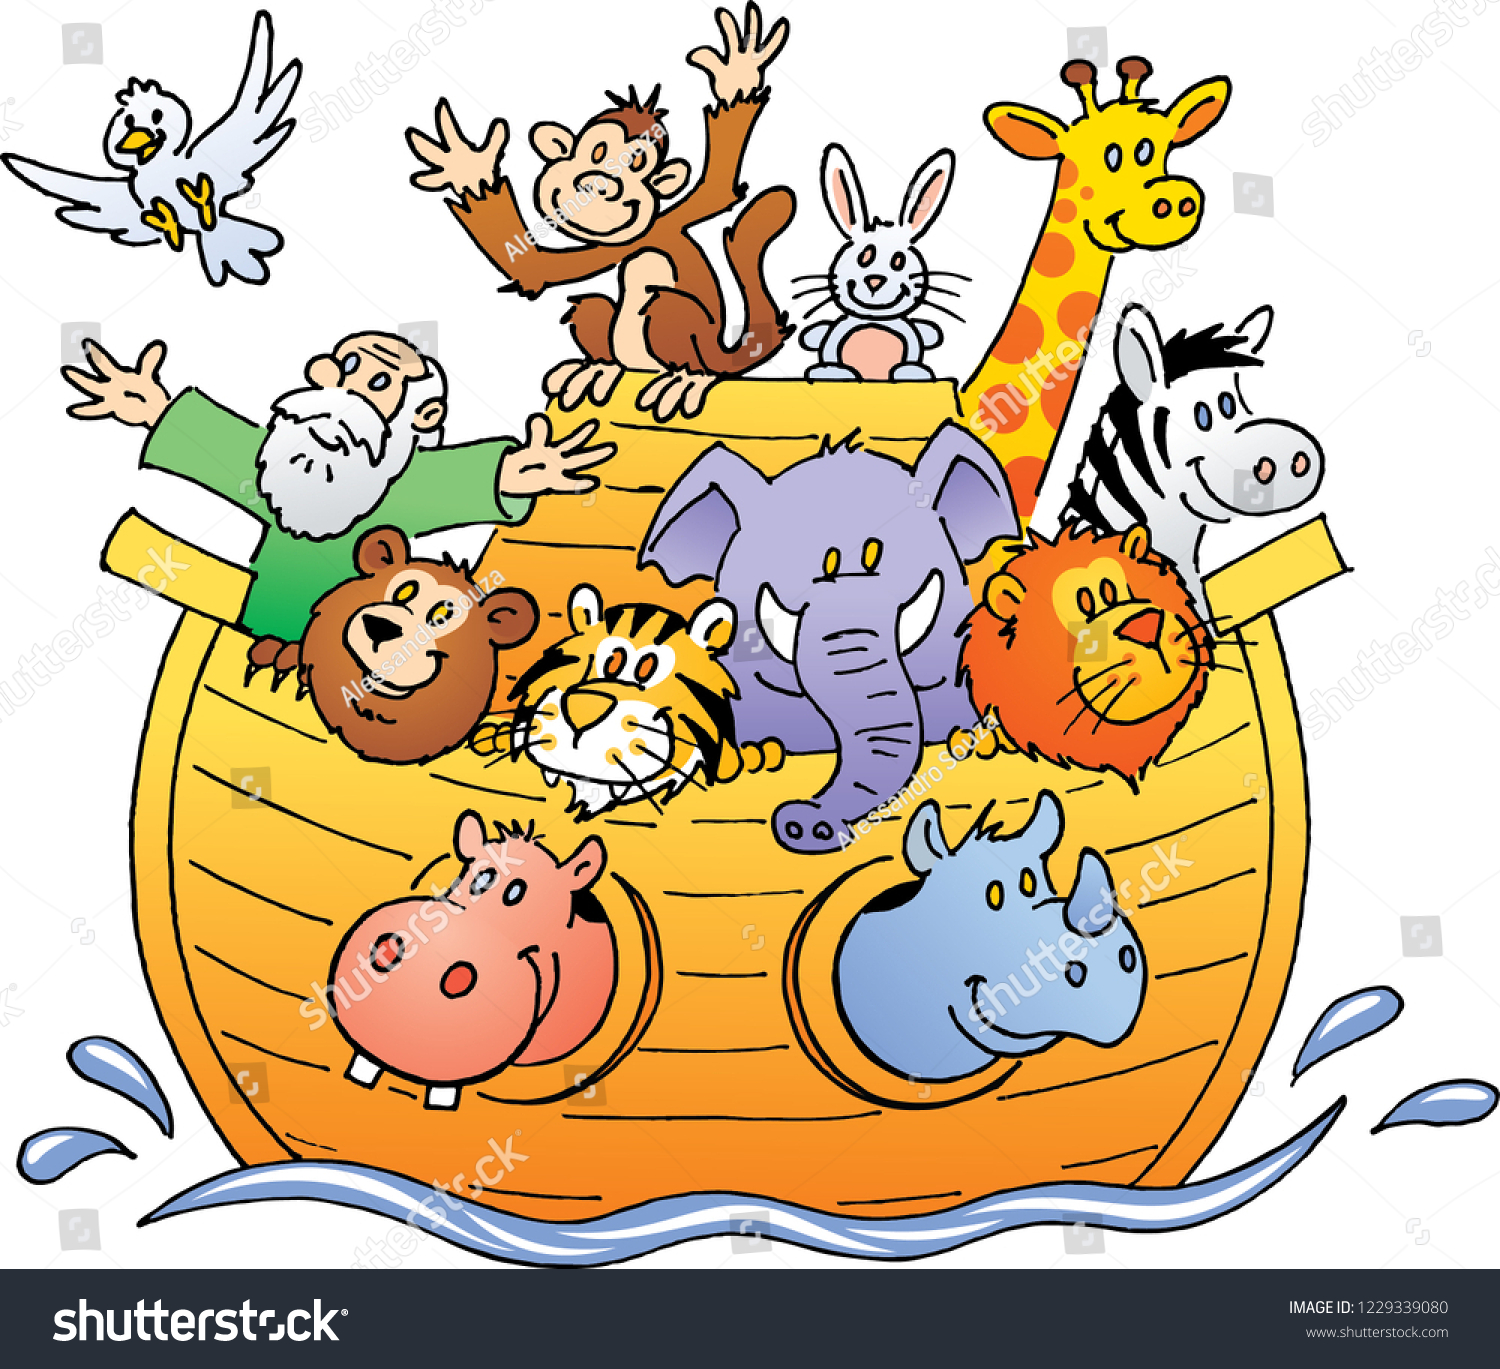 Noahs Ark Cartoon Stock Vector (Royalty Free) 1229339080